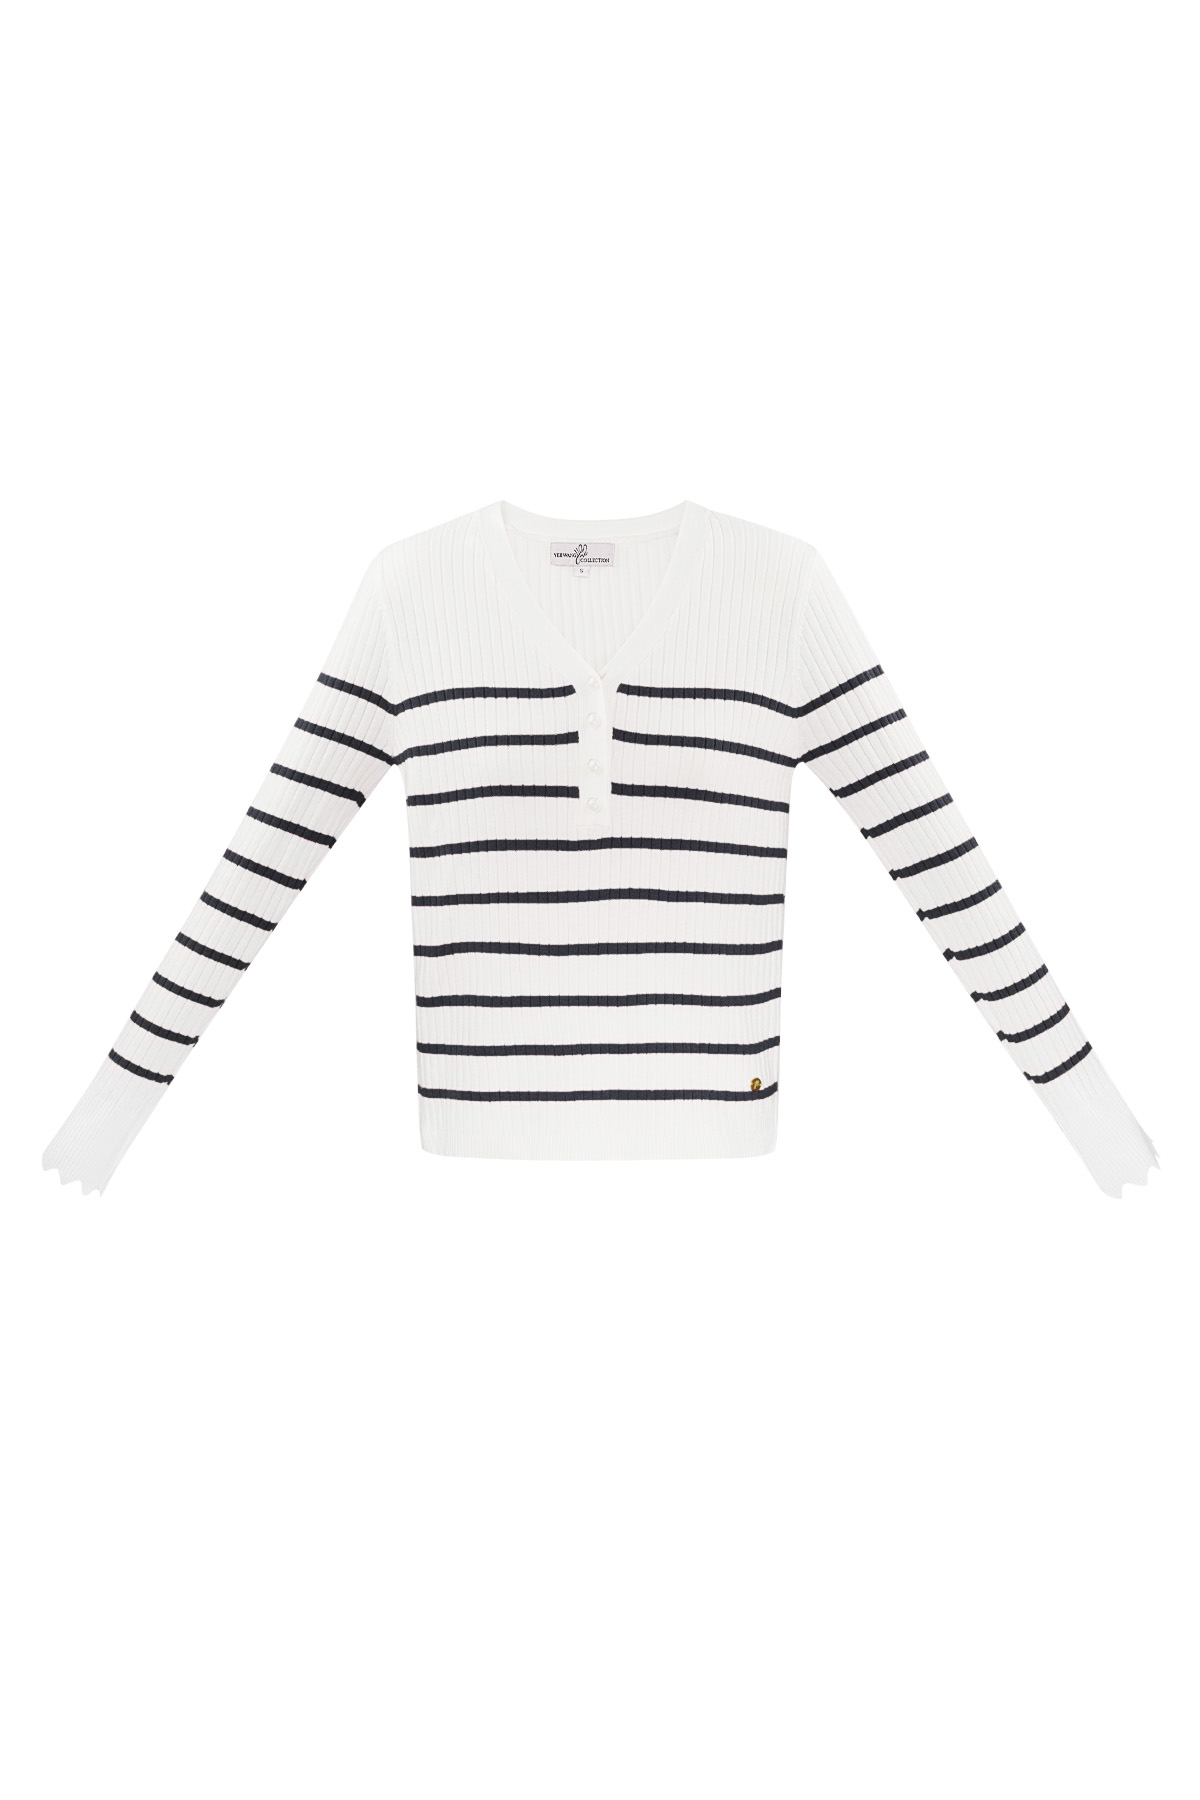 Striped sweater with v-neck - black/white 